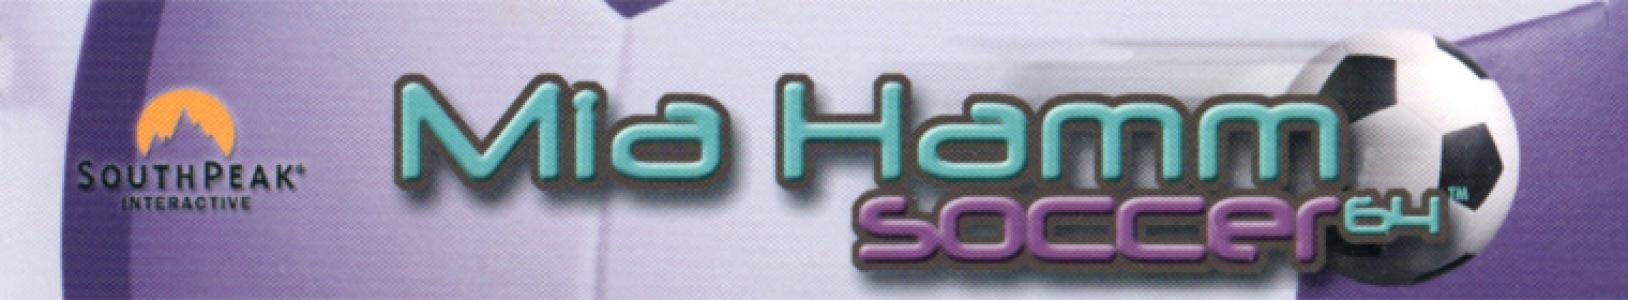 Mia Hamm Soccer 64 banner